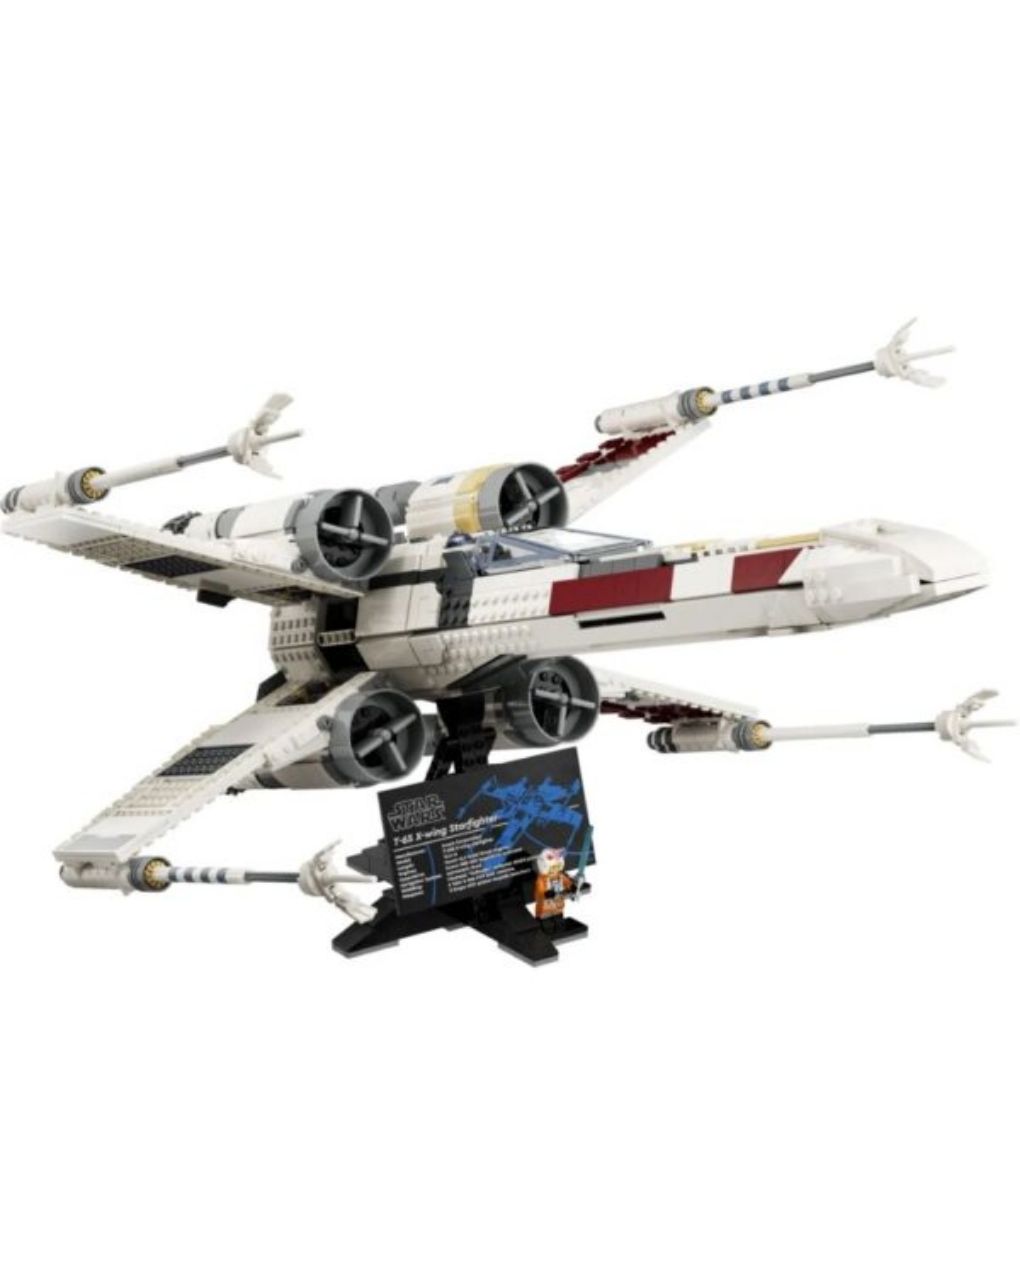 Lego star wars x-wing starfighter 75355 - Lego